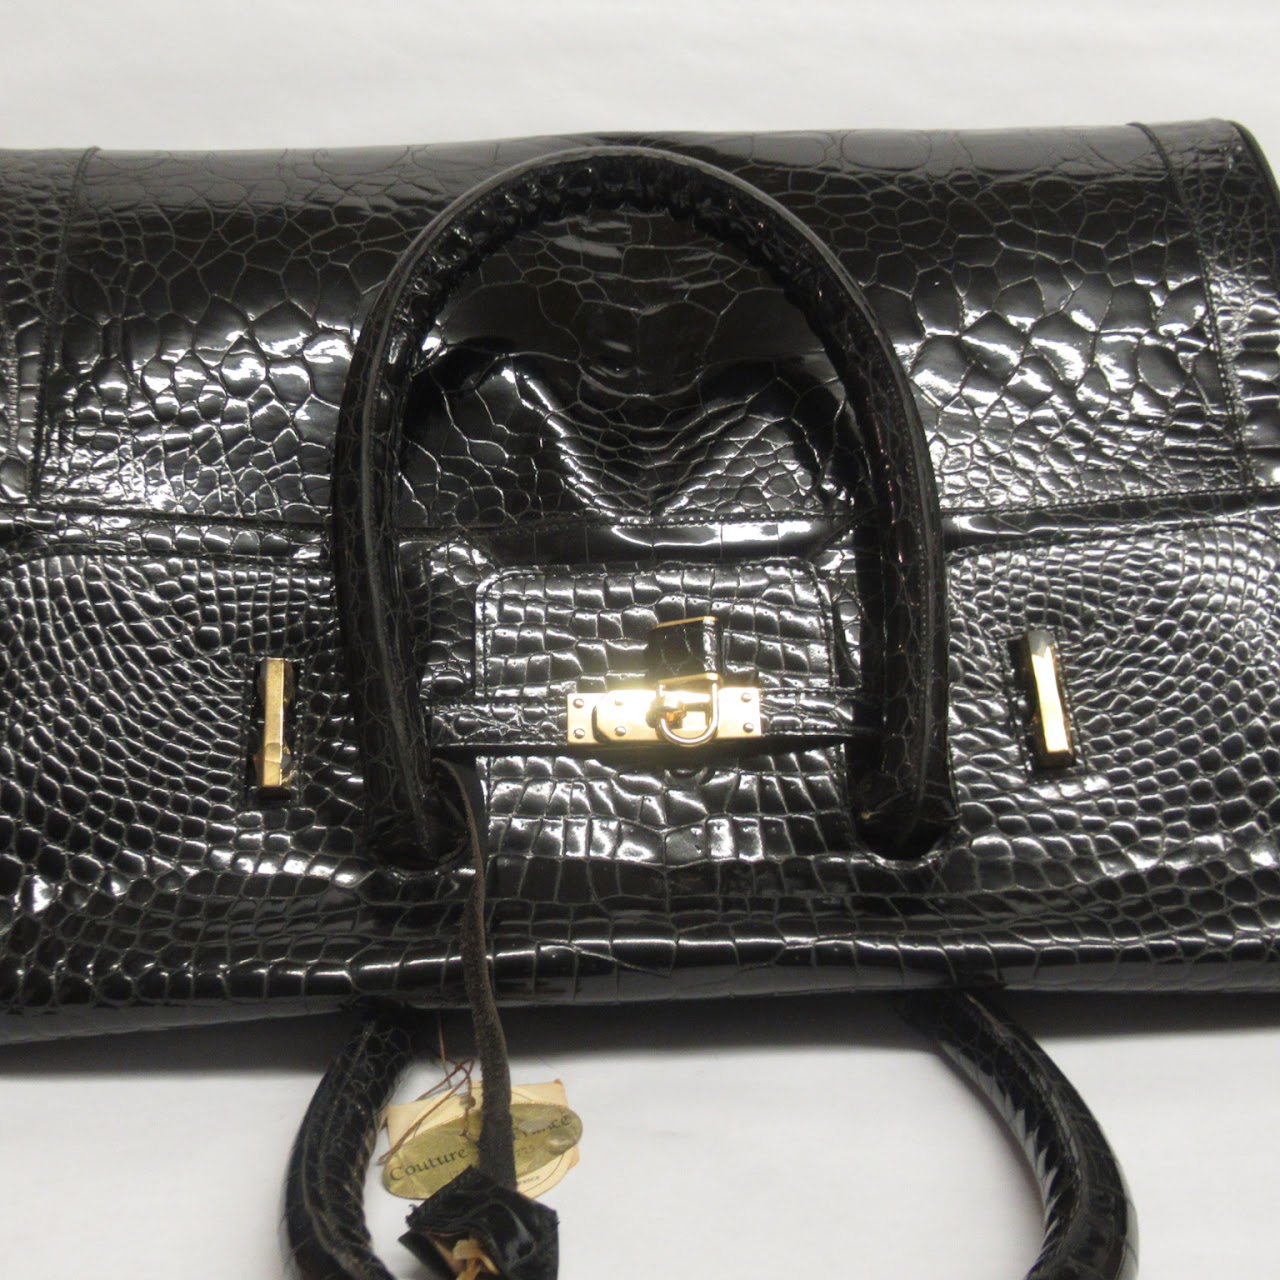 Vintage French Croc-Print Leather Handbag